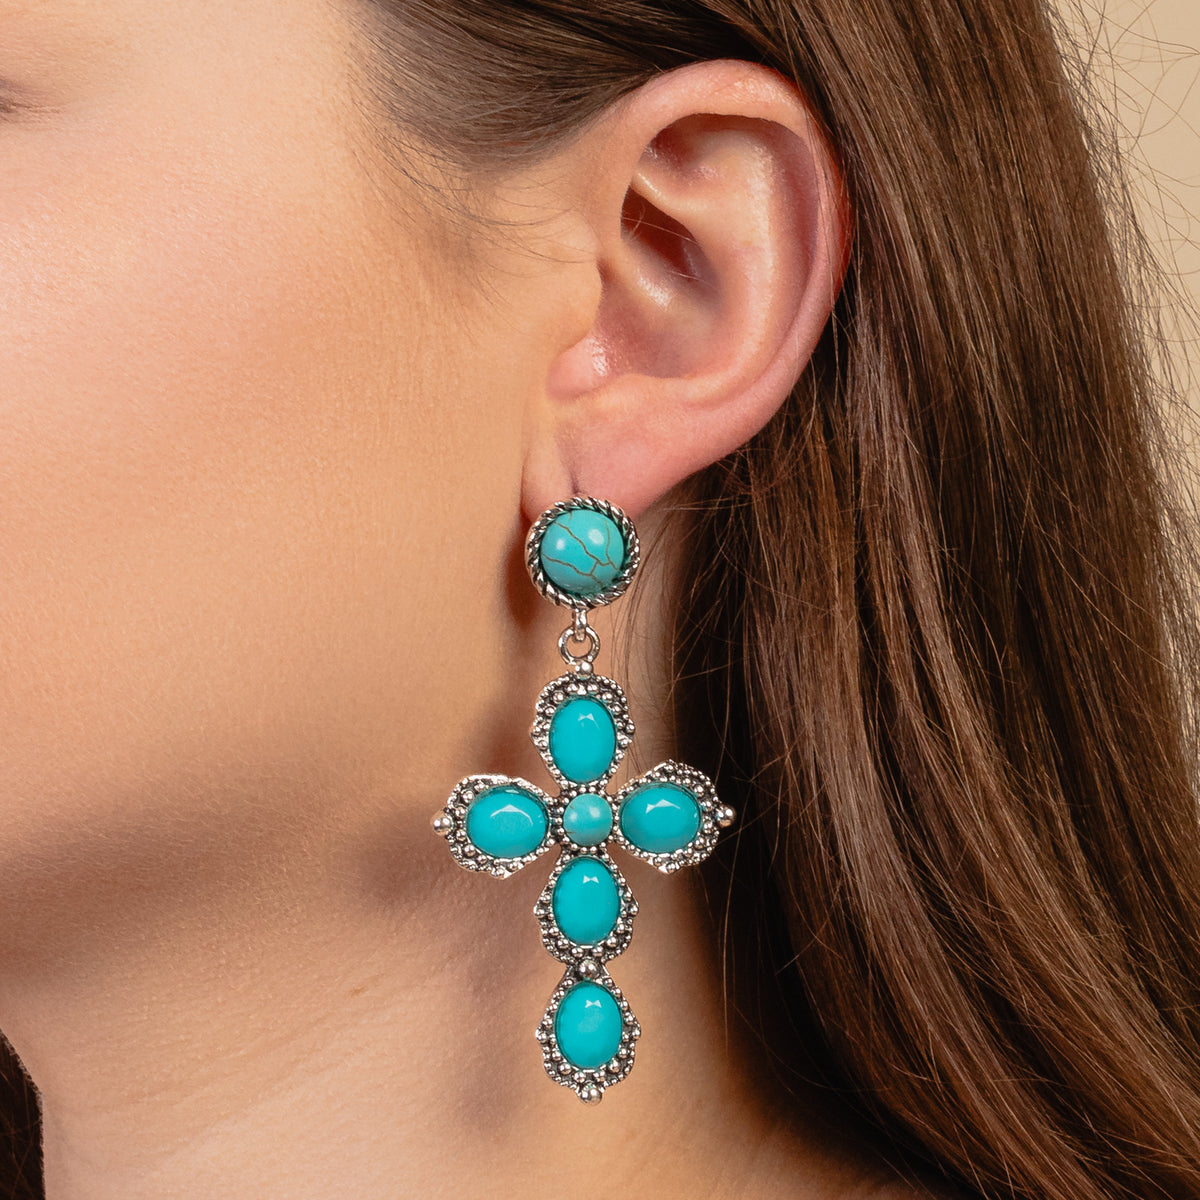 93149 - Crystal Cross Earrings - Turquoise & Silver